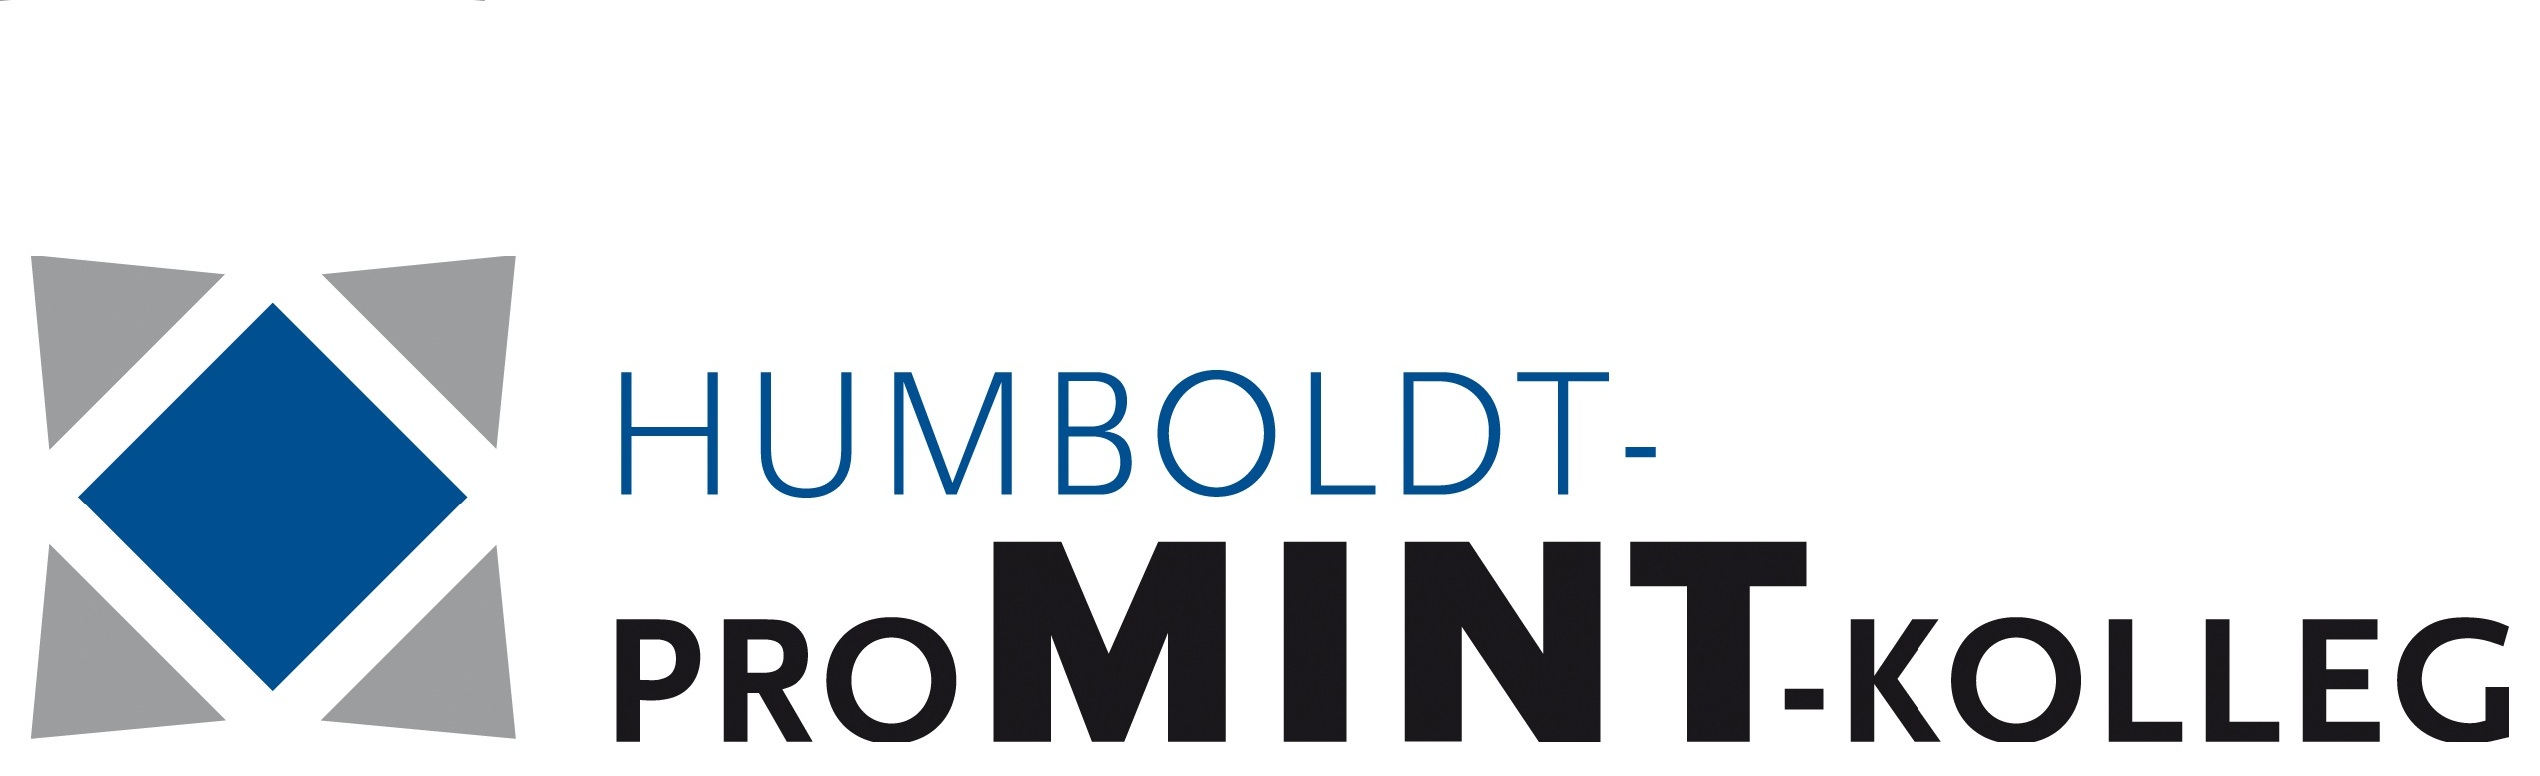 Humboldt-ProMINT-Kolleg